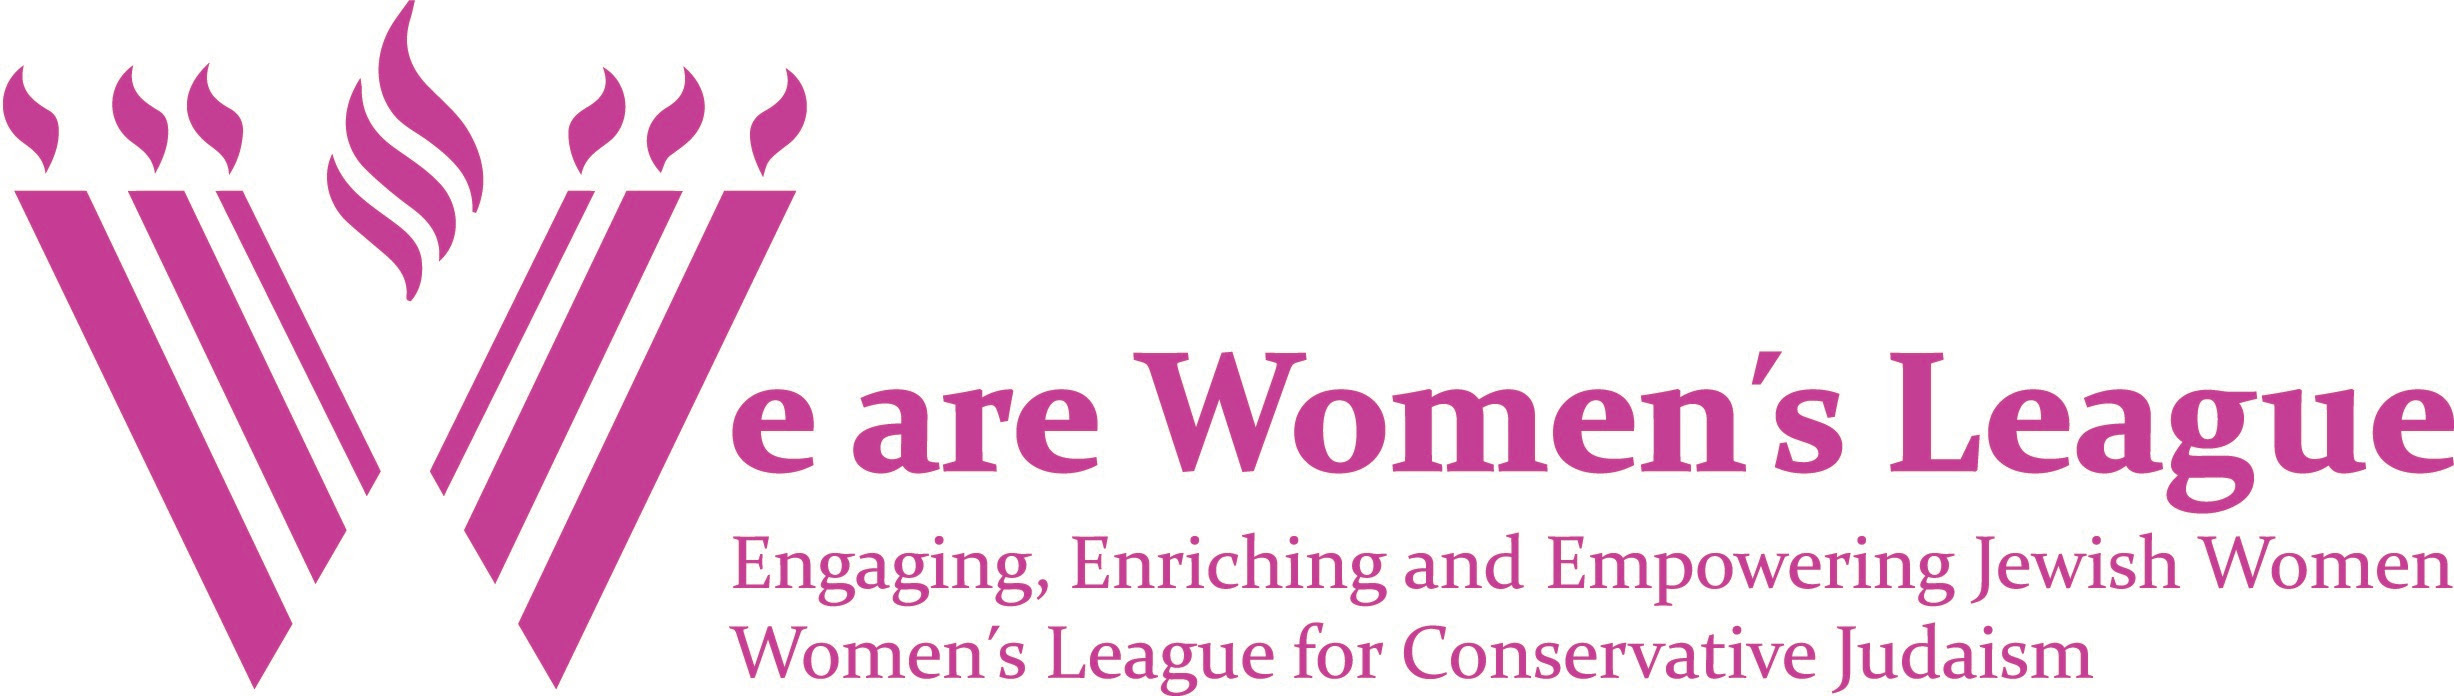 Women's league logo